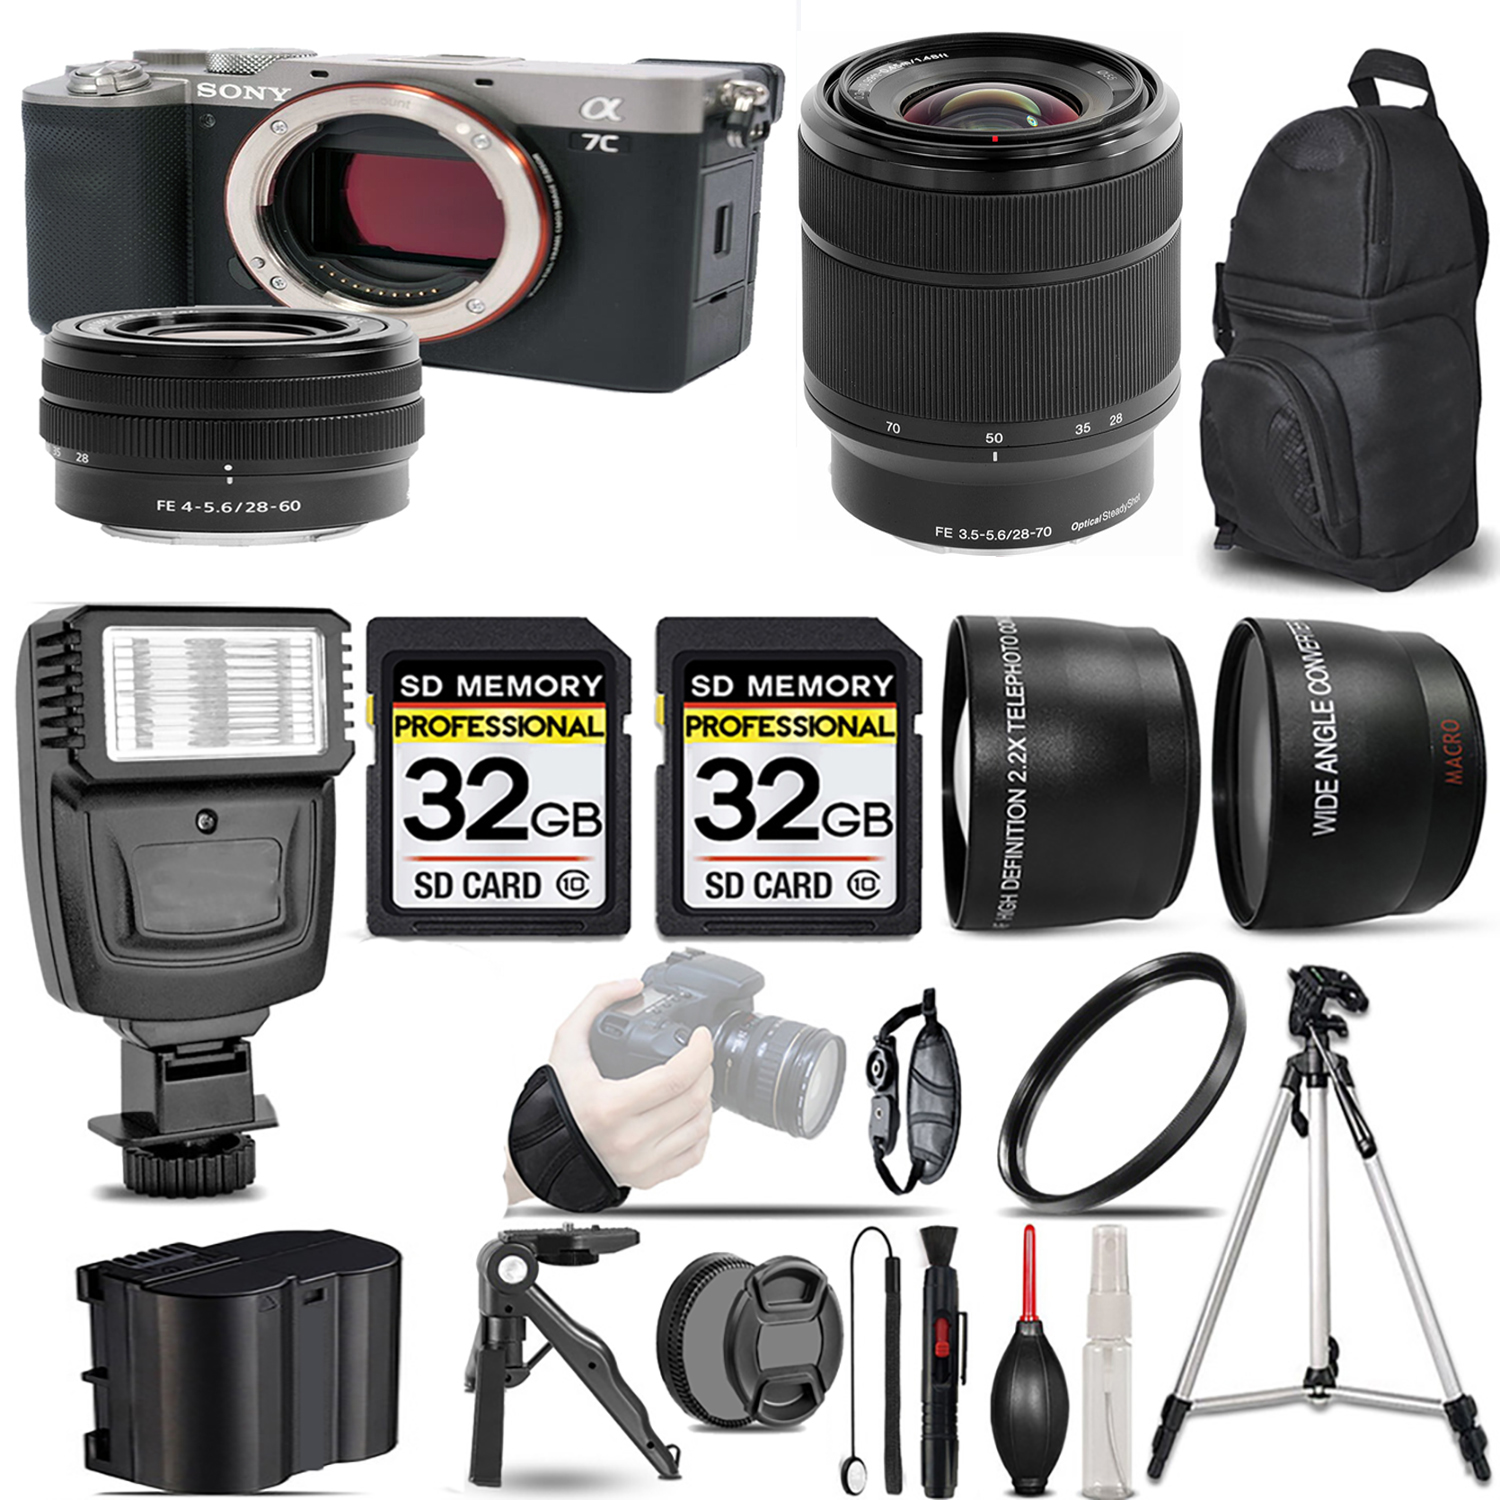 Alpha a7C Camera (Silver) + 28-60mm Lens + 28-70mm f/3.5-5.6 OSS Lens + Flash + 64GB *FREE SHIPPING*